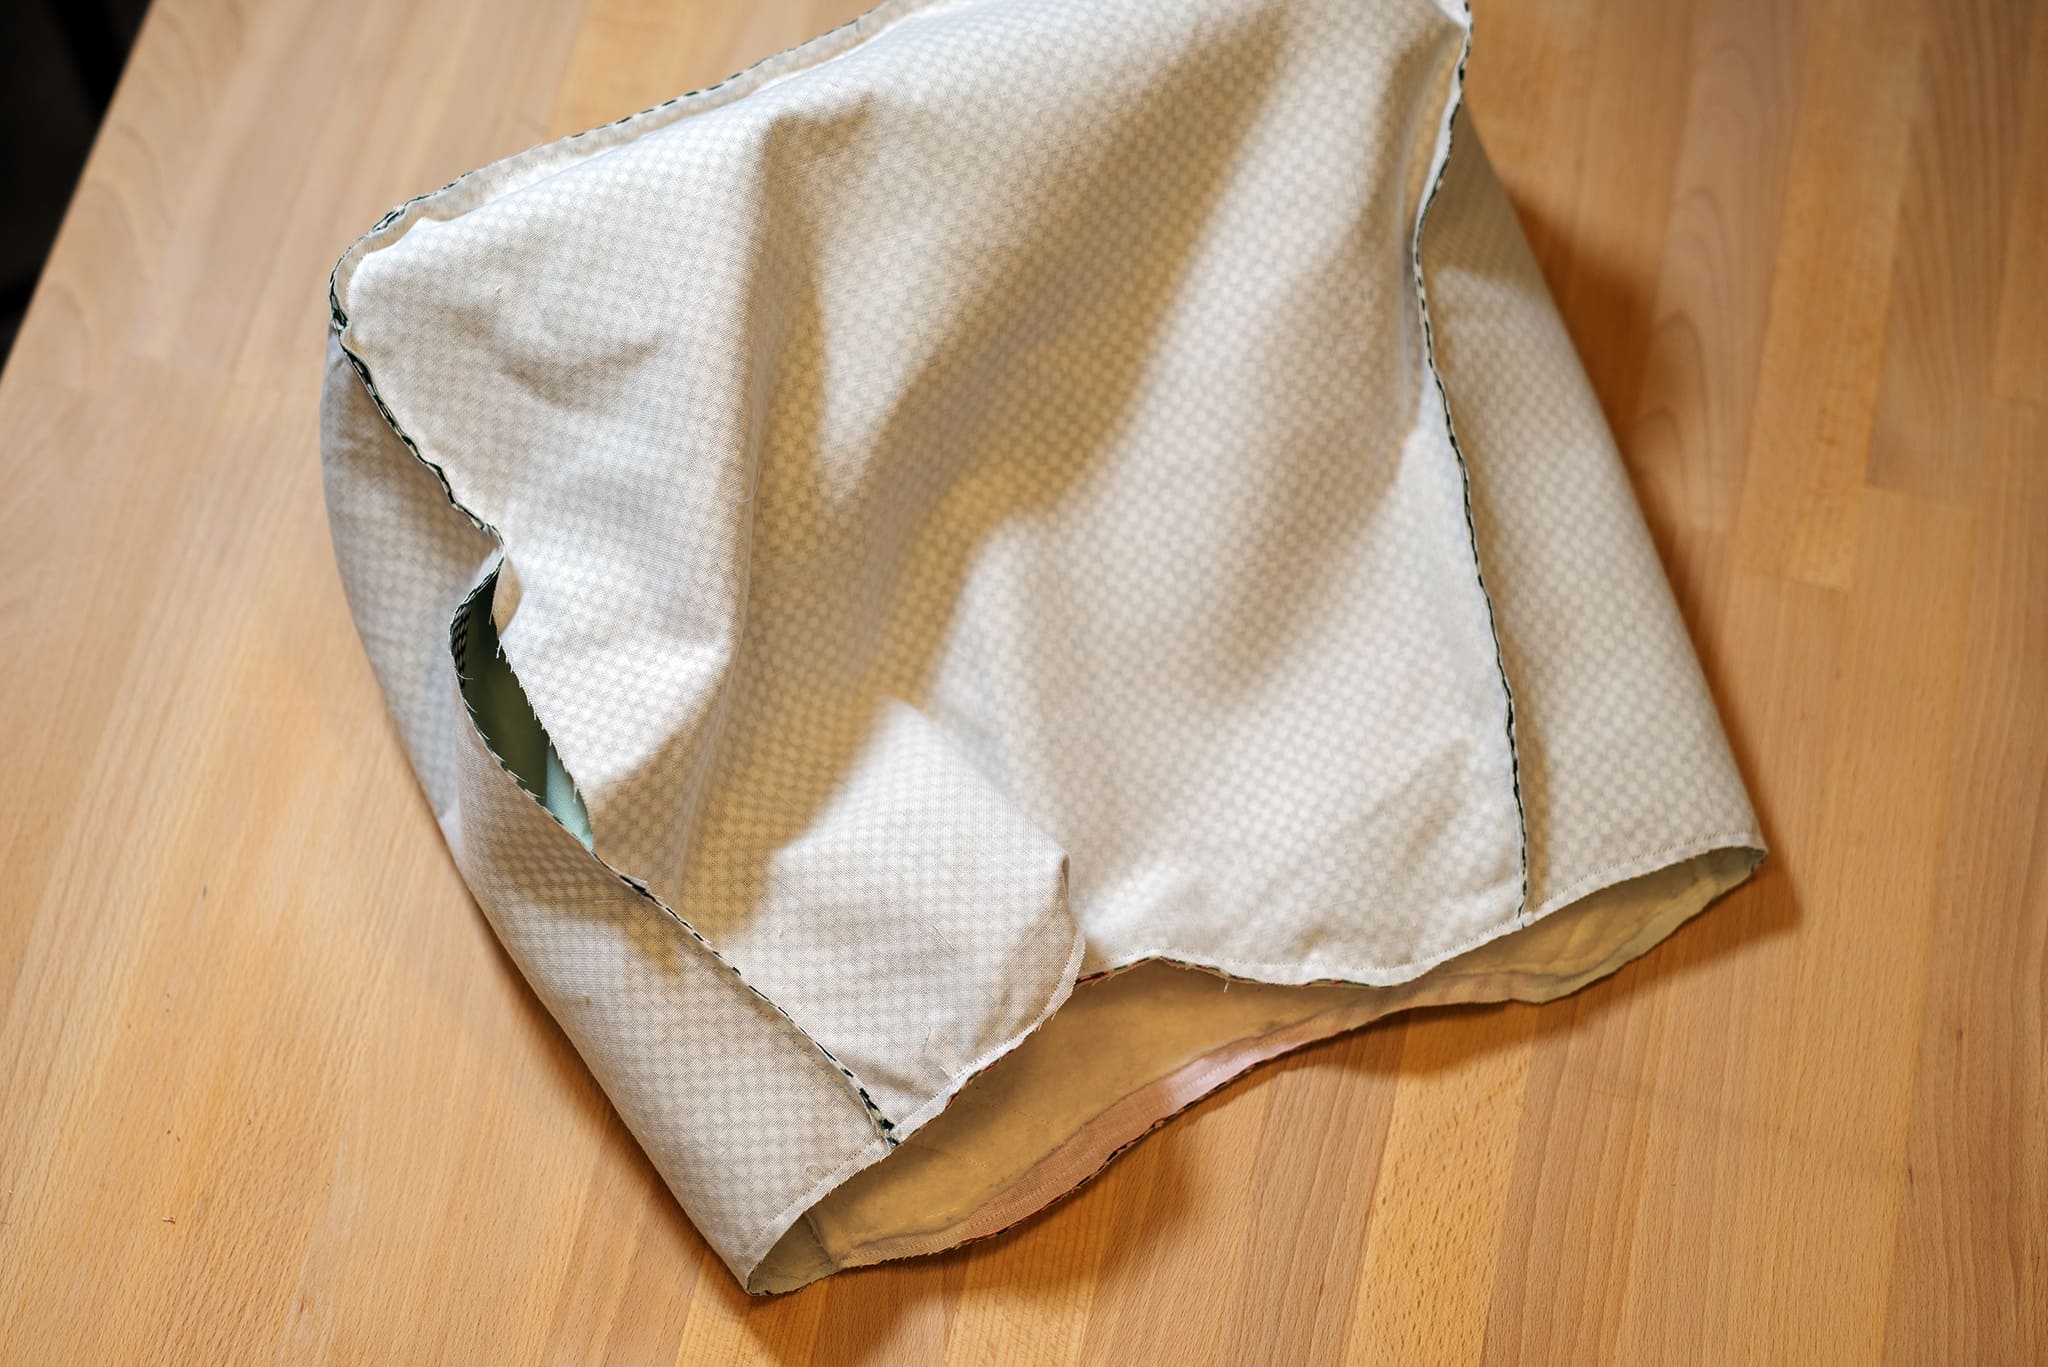 DIY Quilted Tote Bag Pattern